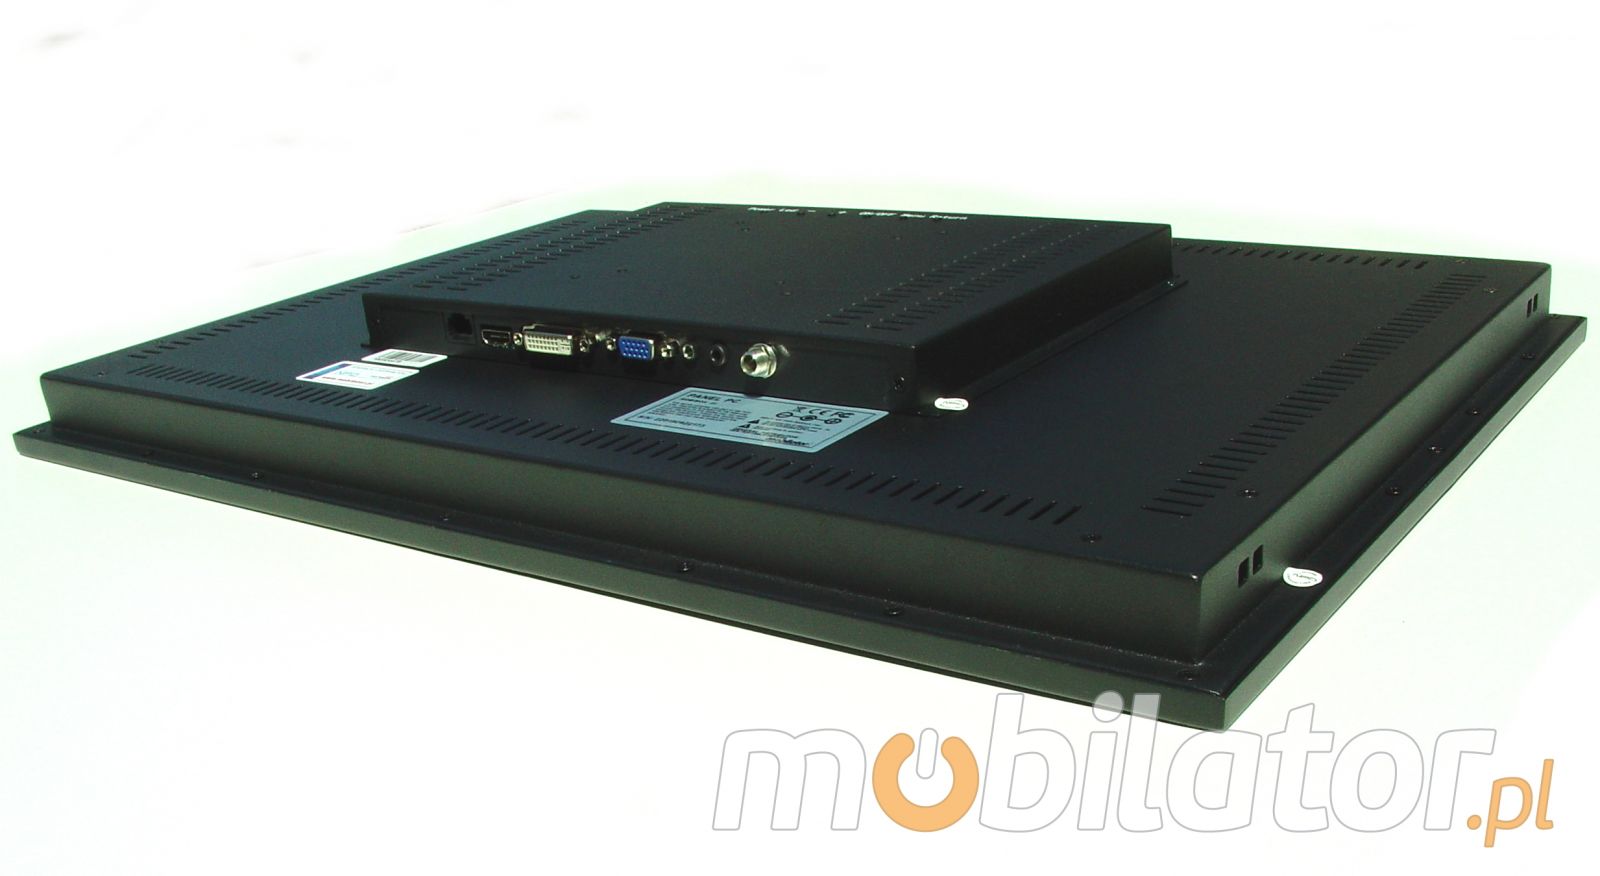 Monitor dotykowy PC  Ekran pojemnociowy capacitive wywietlacz 22 cali LED mobilator.pl New Portable Devices VGA HDMI